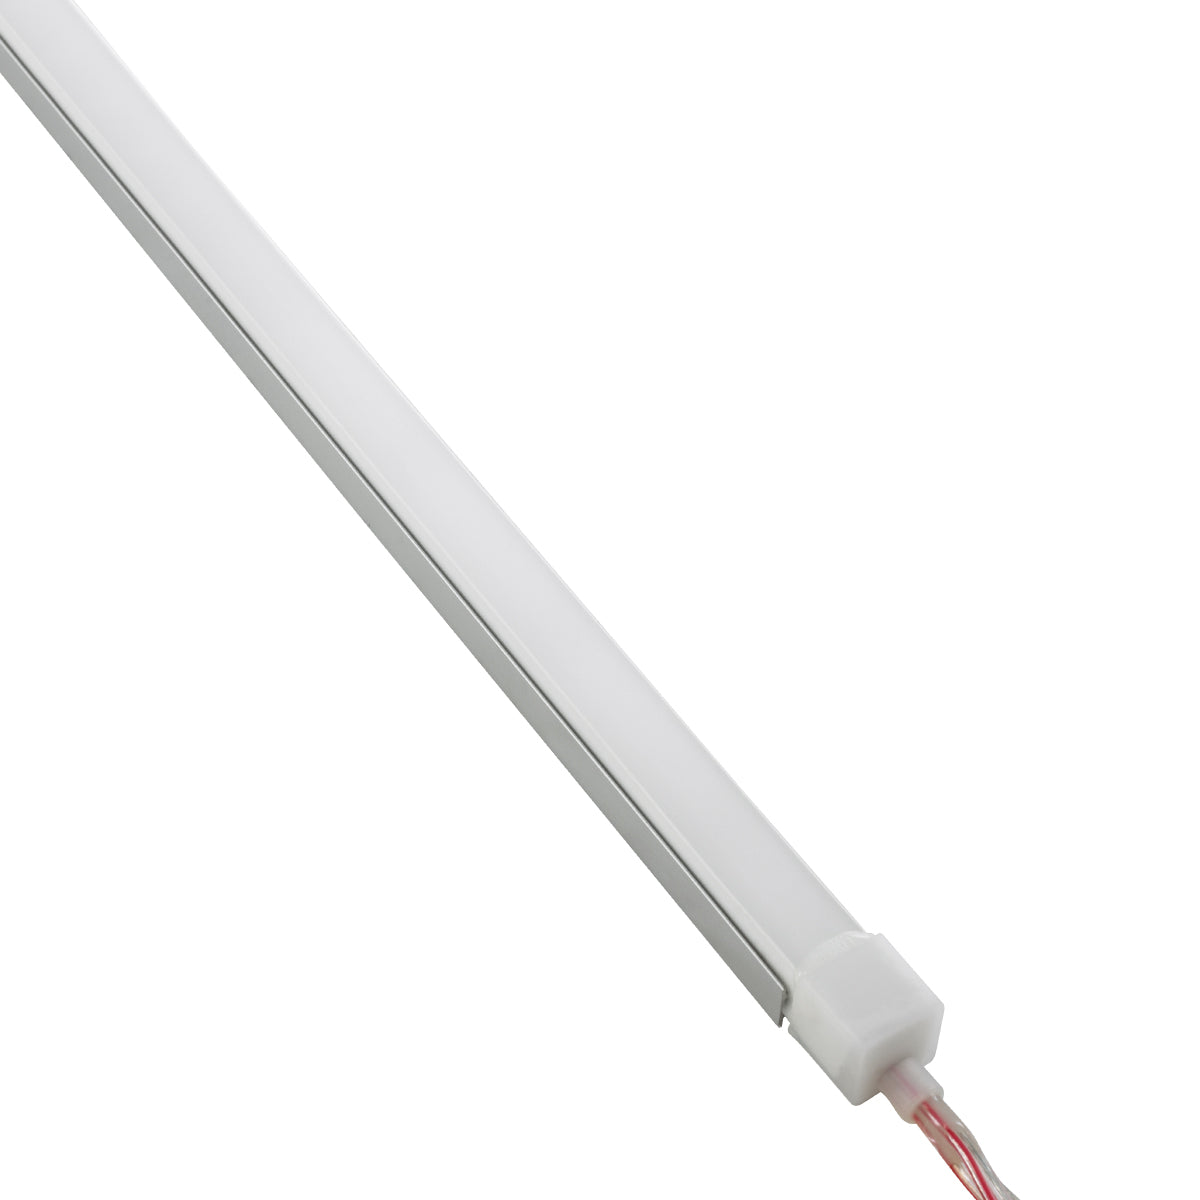 GloboStar® CON-NEONIO 90766 Προφίλ Αλουμινίου 3 Μέτρων - Βάση Στήριξης για την NEONIO Digital Neon Flex LED 14.4W/m 12VDC με Π1.4 x Υ1.4cm - Ασημί - Μ300 x Π1.6 x Υ1.1cm